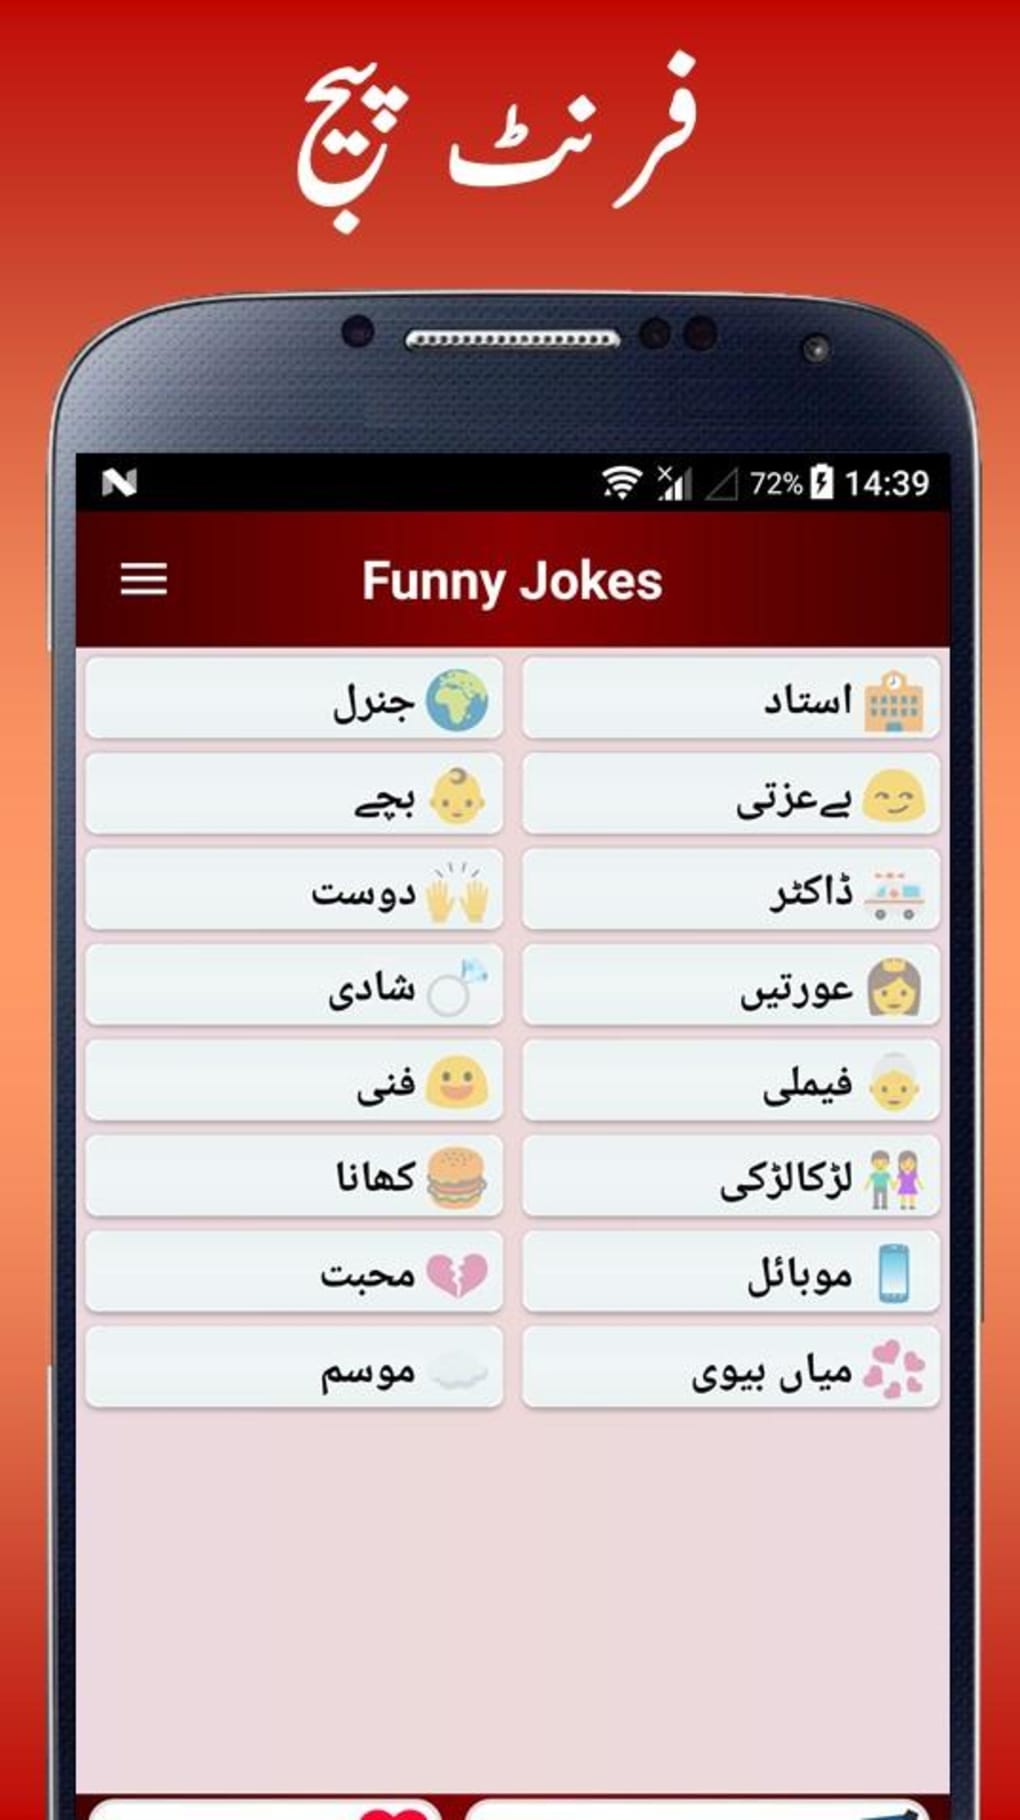 Funny Urdu Jokes APK cho Android - Tải về